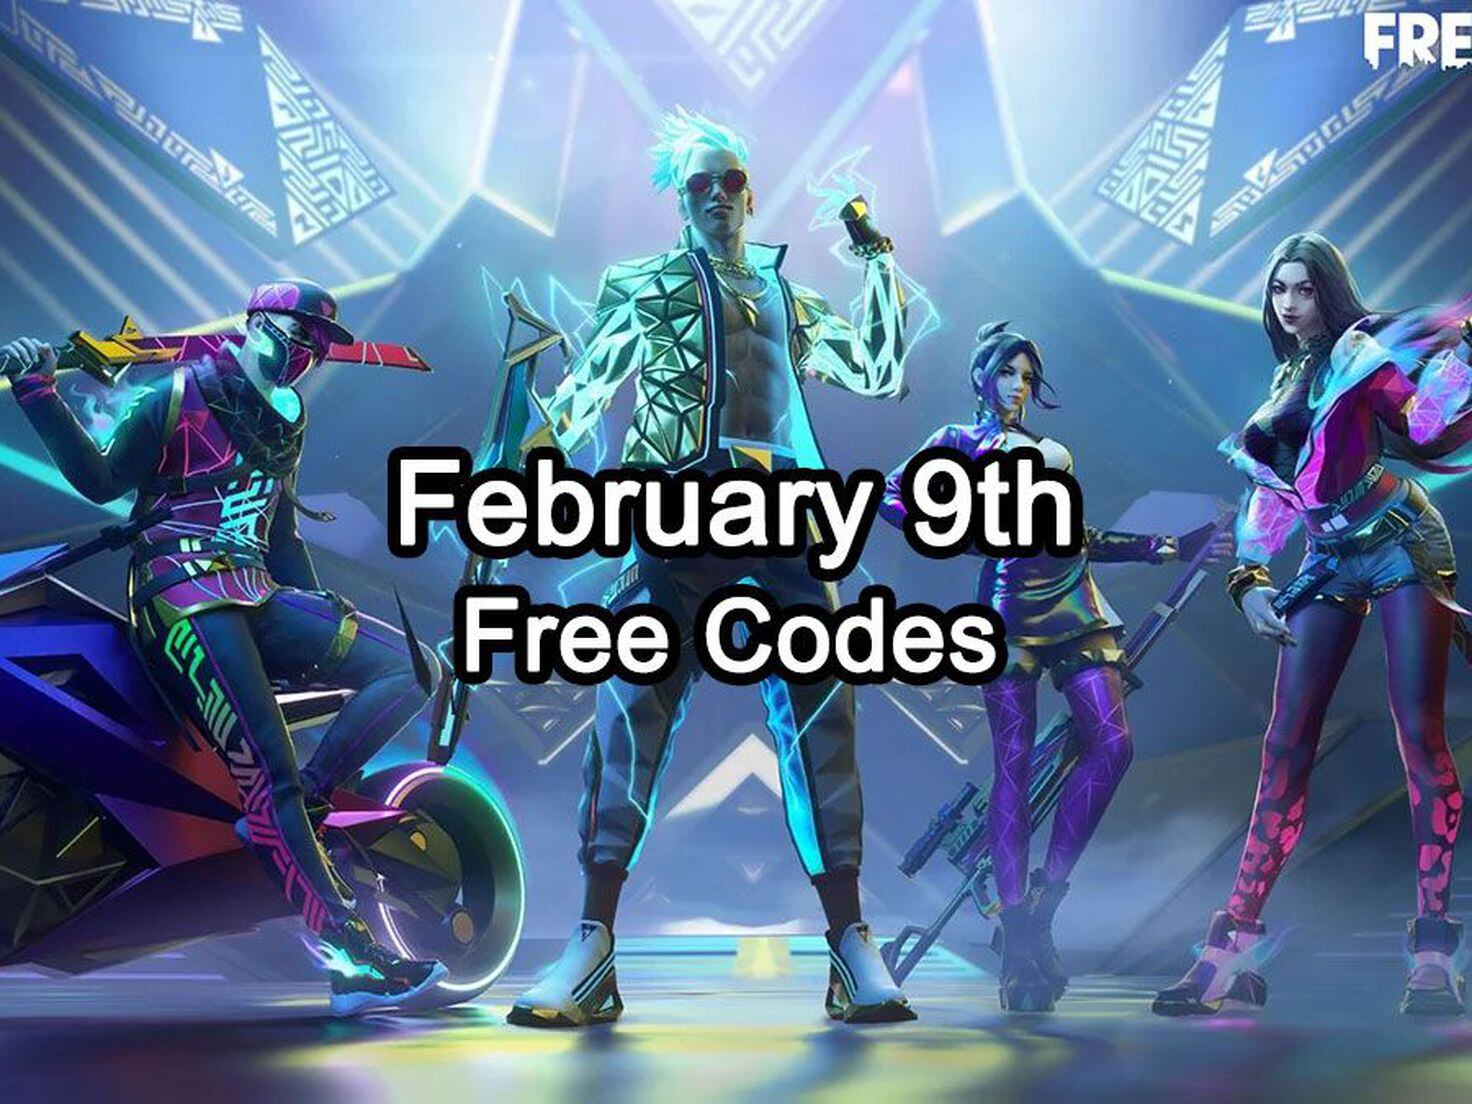 Garena Free Fire Redeem Code December 12th: Free Exclusive Rewards